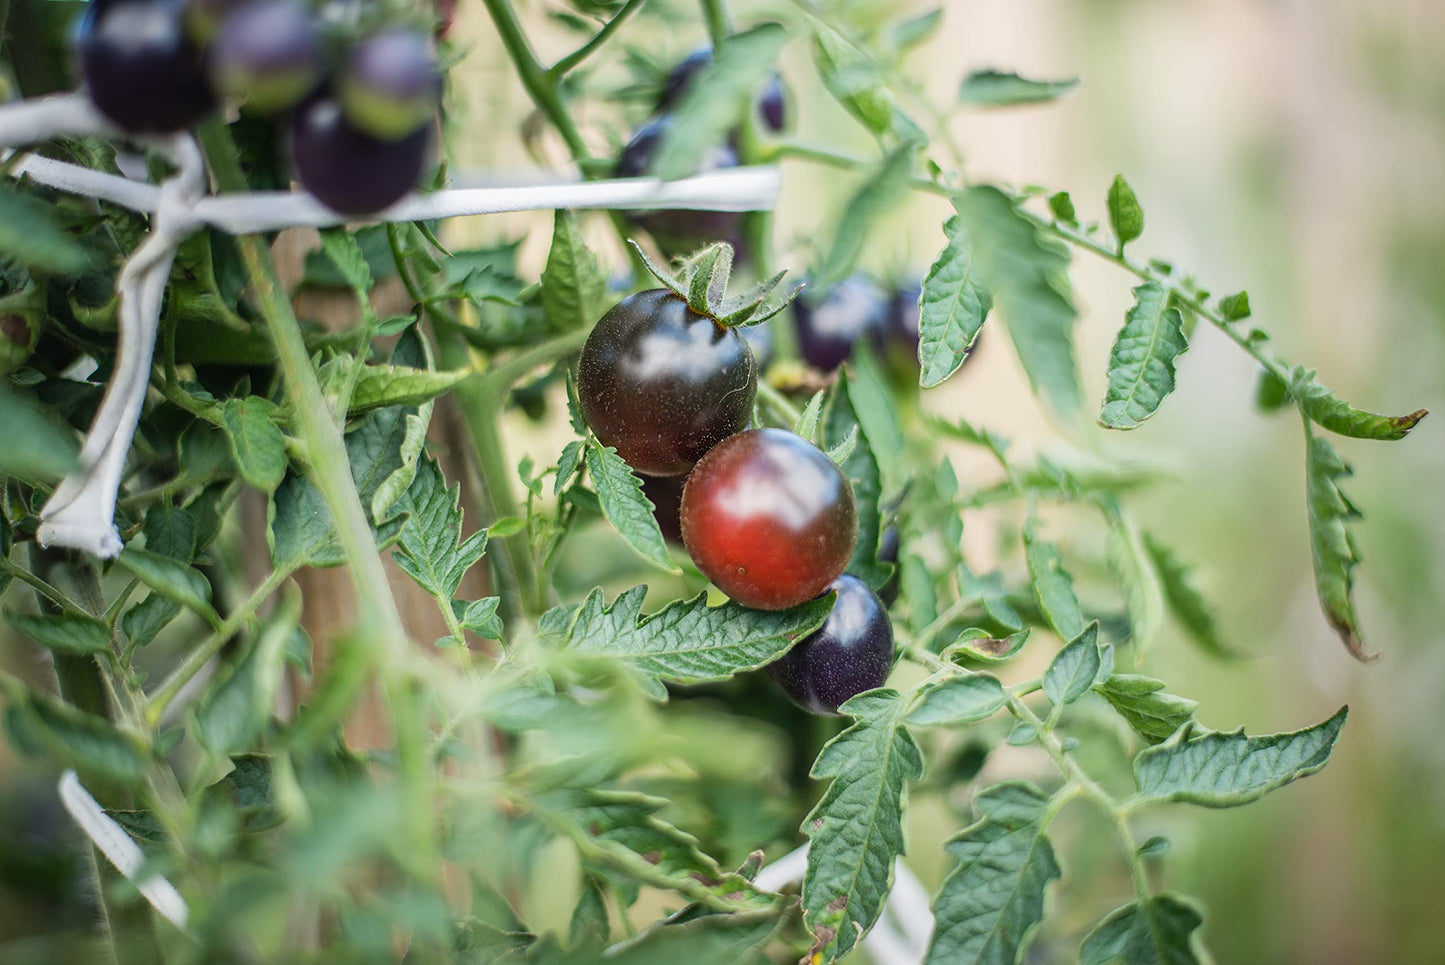 Heritage Tomato Plants - 'Black Cherry' - 1 x Full Plant in a 10.5cm Pot